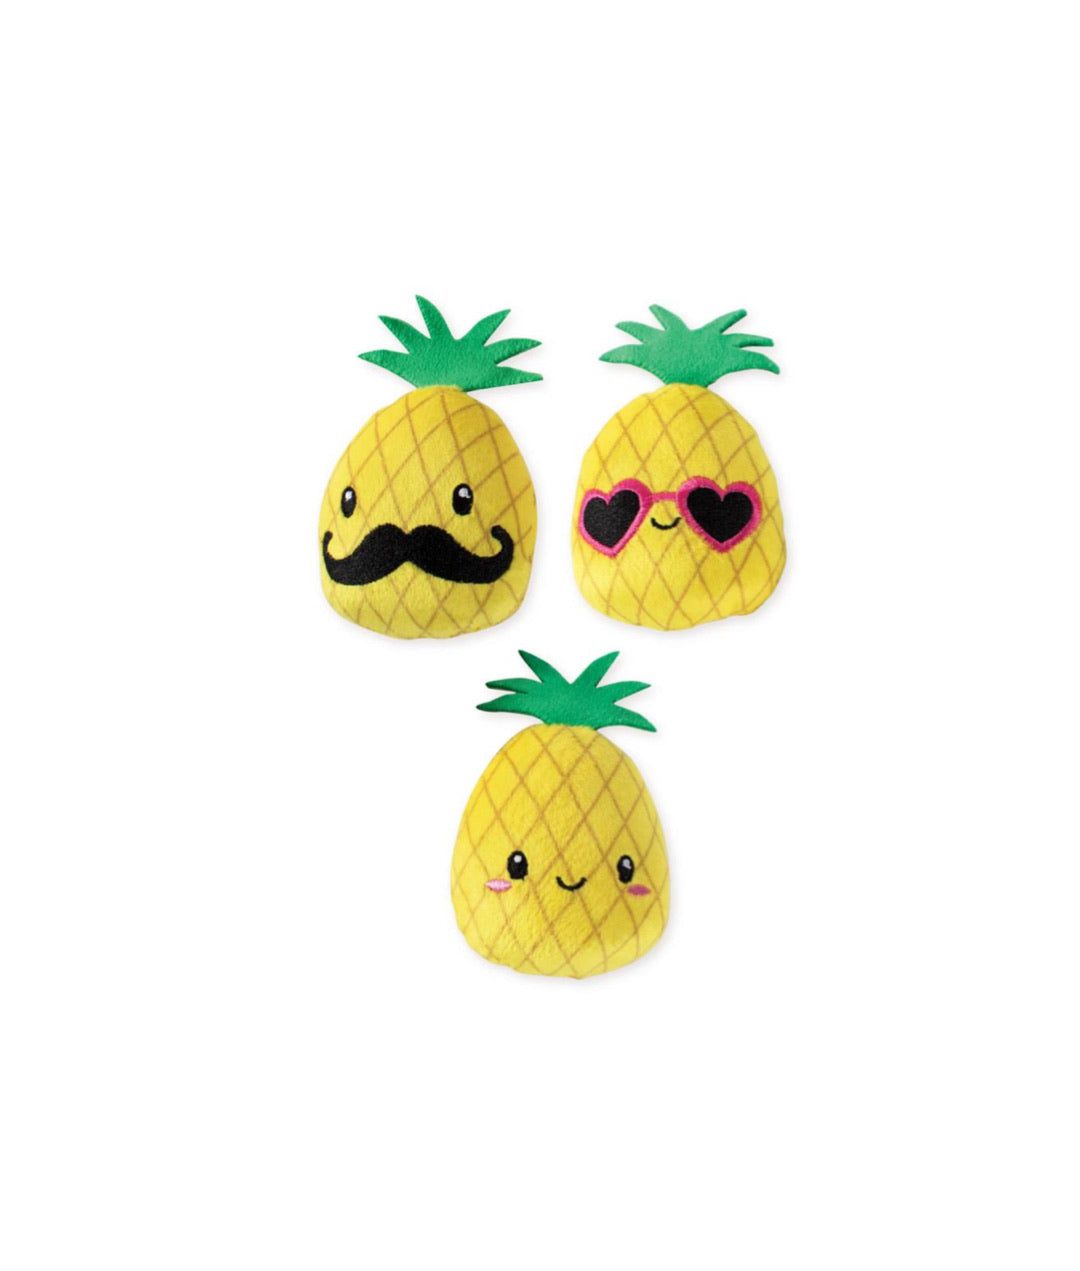 Fringe Studio Toy Box Mini Pineapples Squeaky Plush Toy